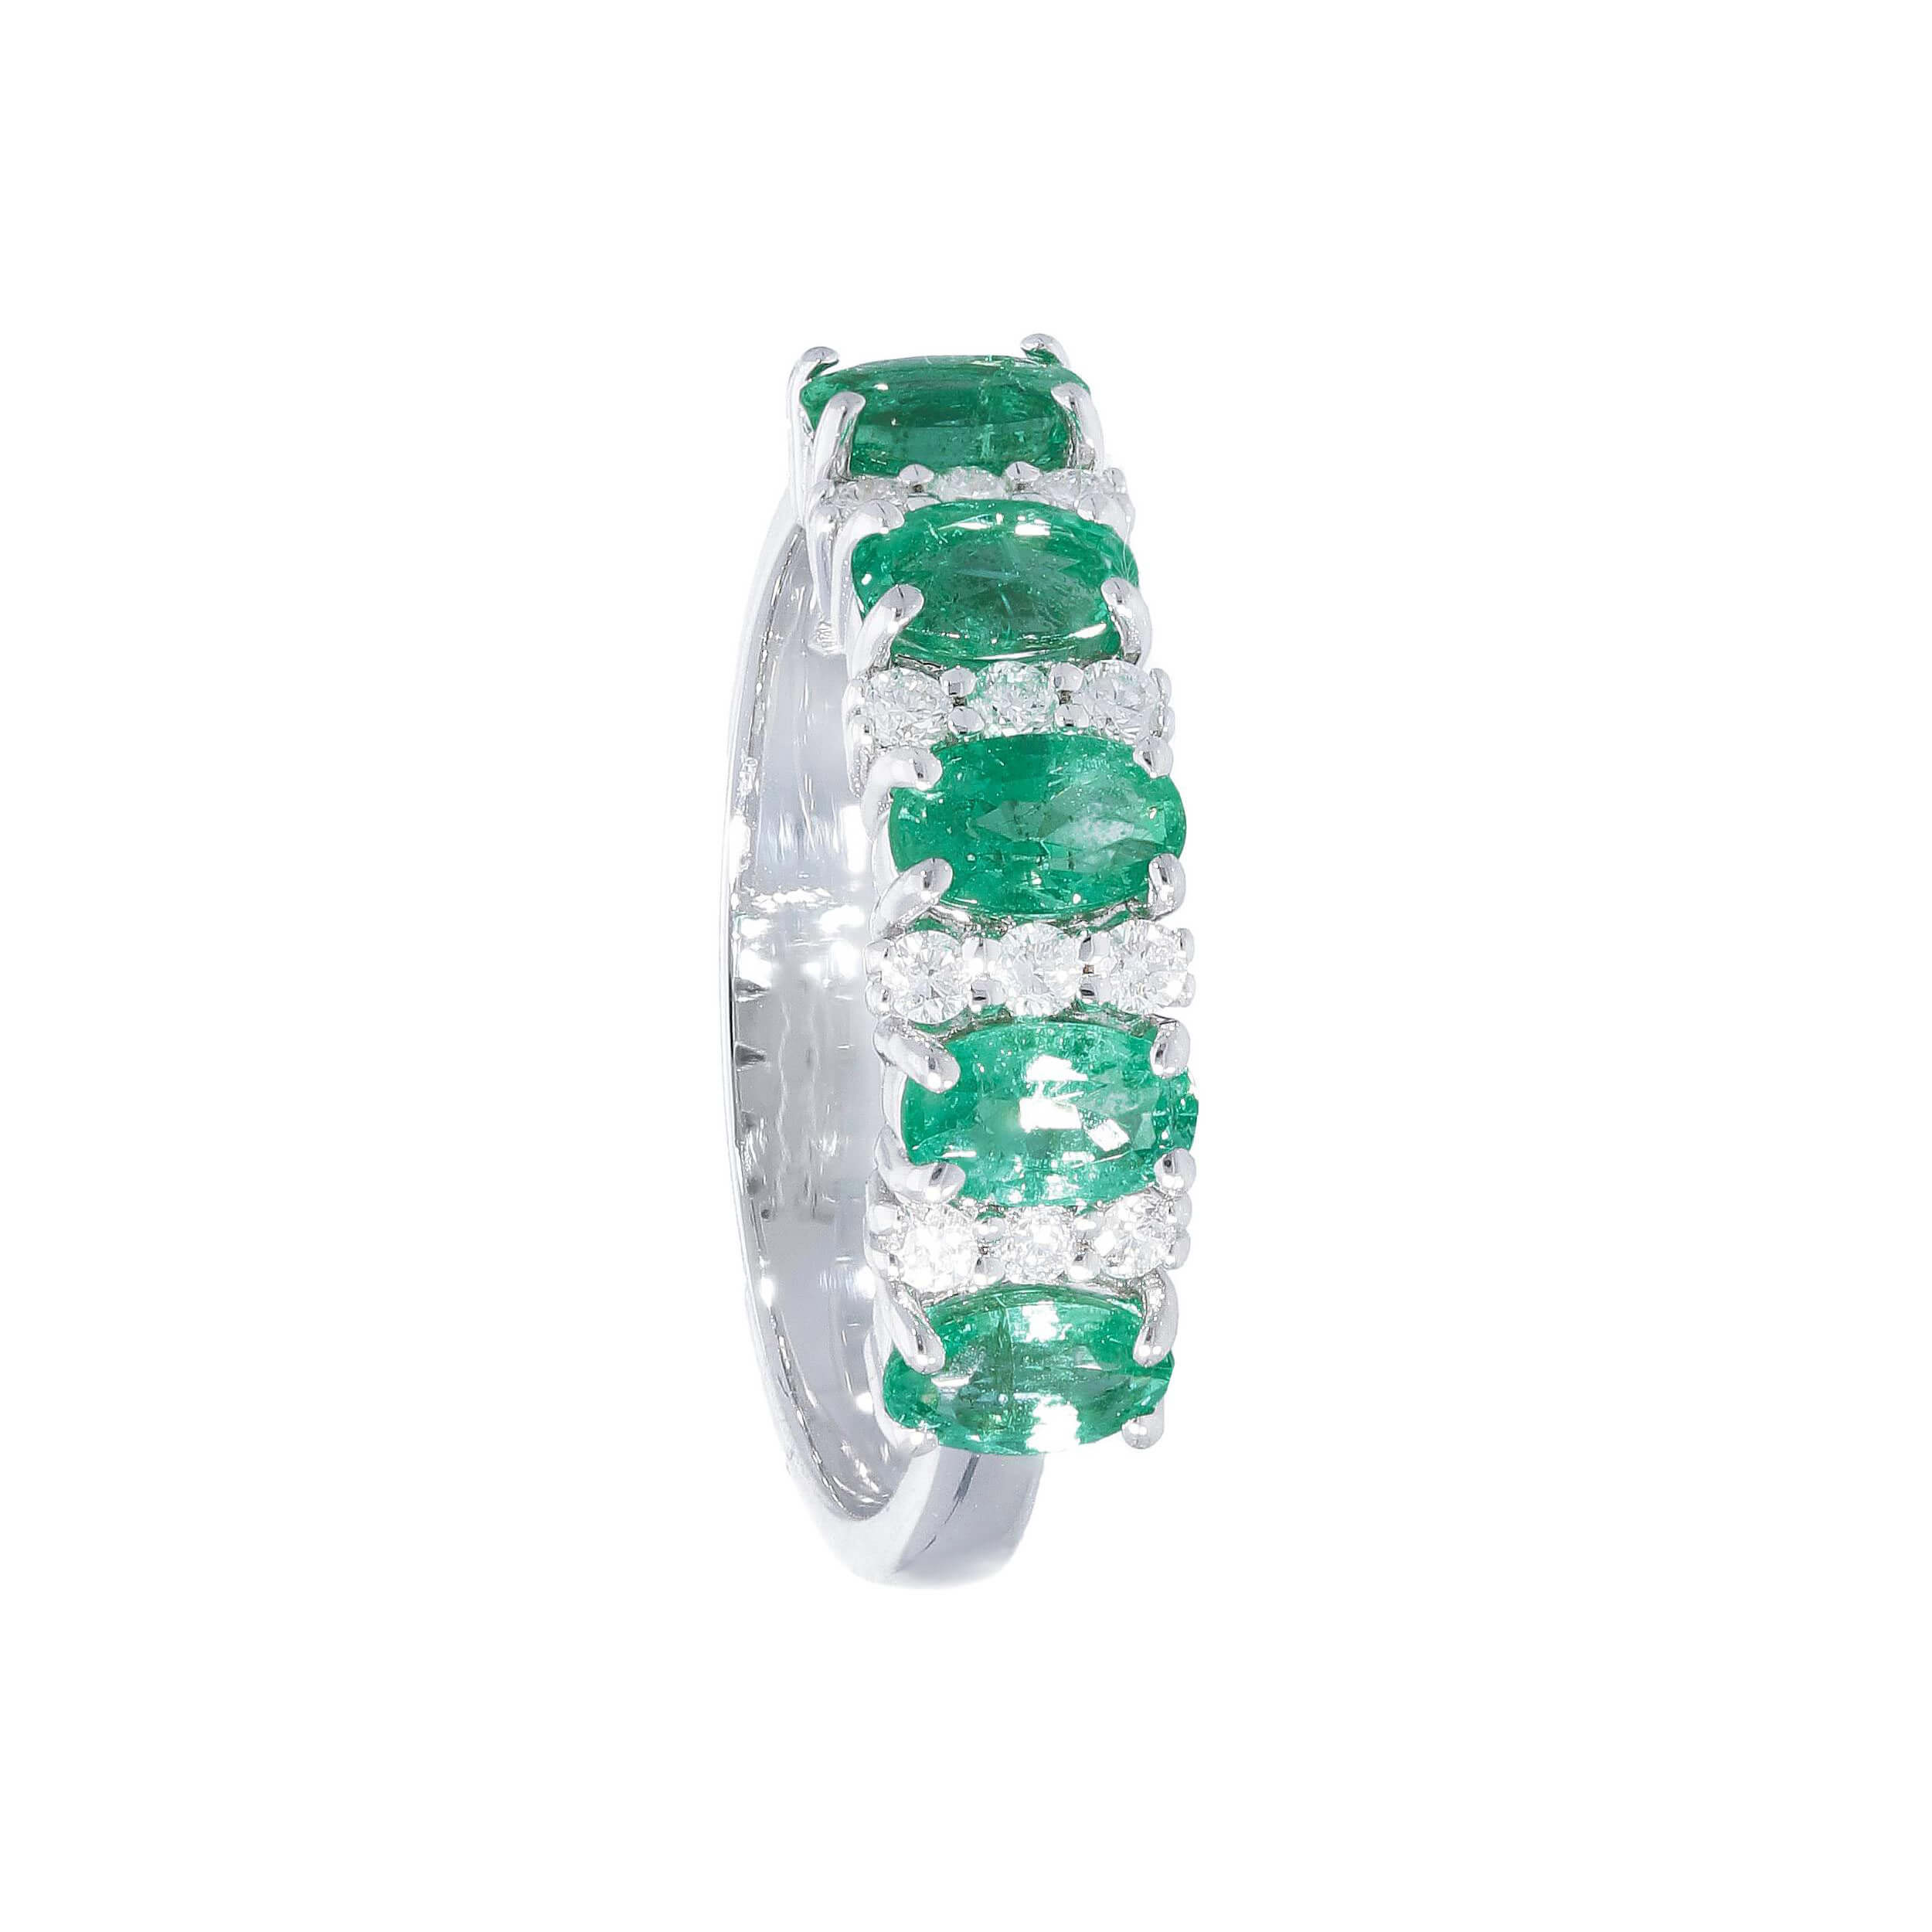 Emerald ring diamonds white gold 750% art. 243160